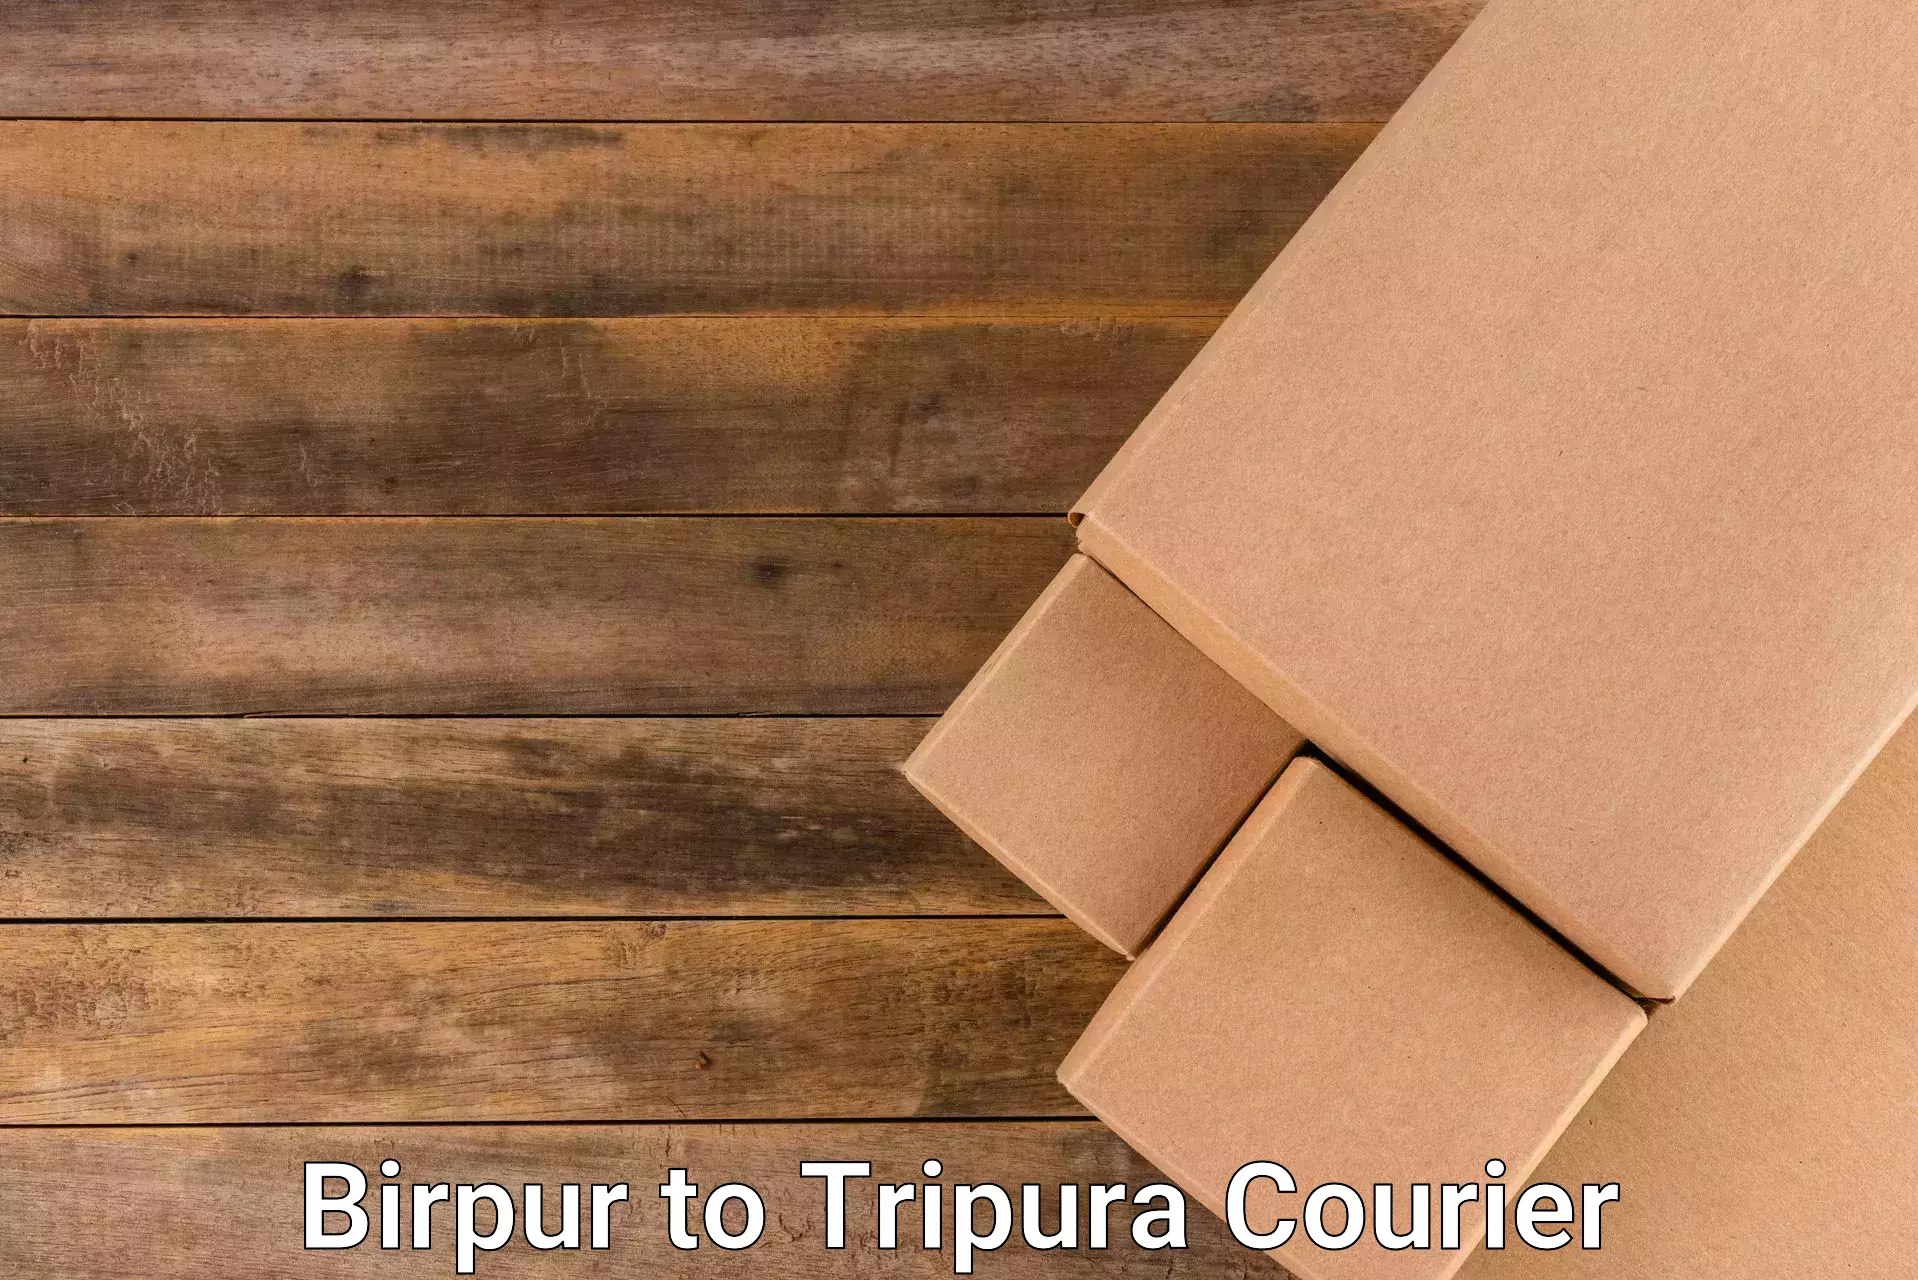 Courier service comparison Birpur to Dharmanagar